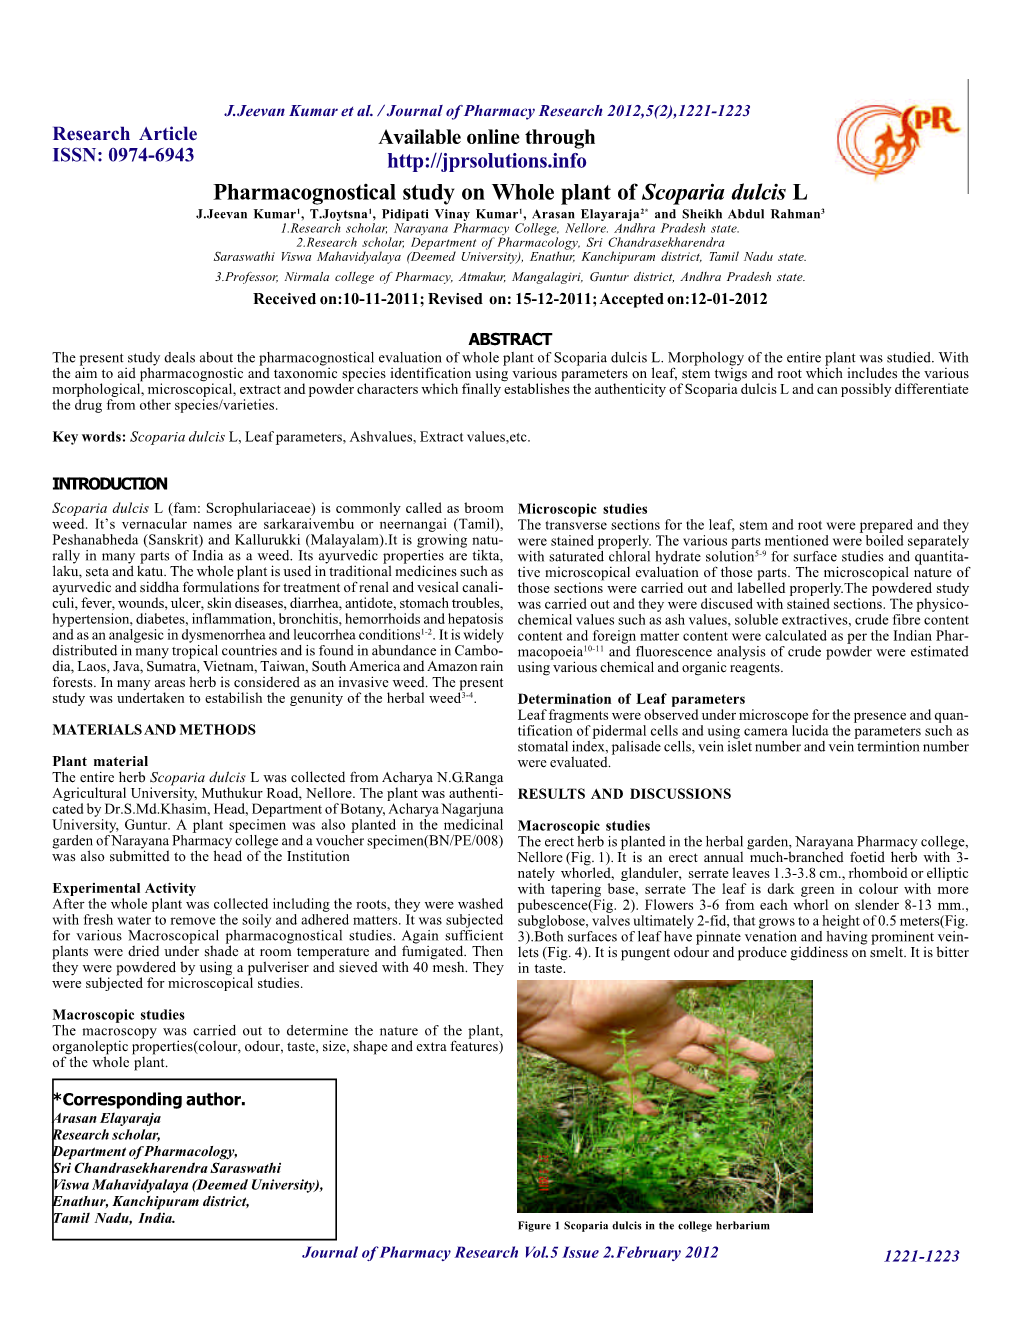 Pharmacognostical Study on Whole Plant of Scoparia Dulcis L